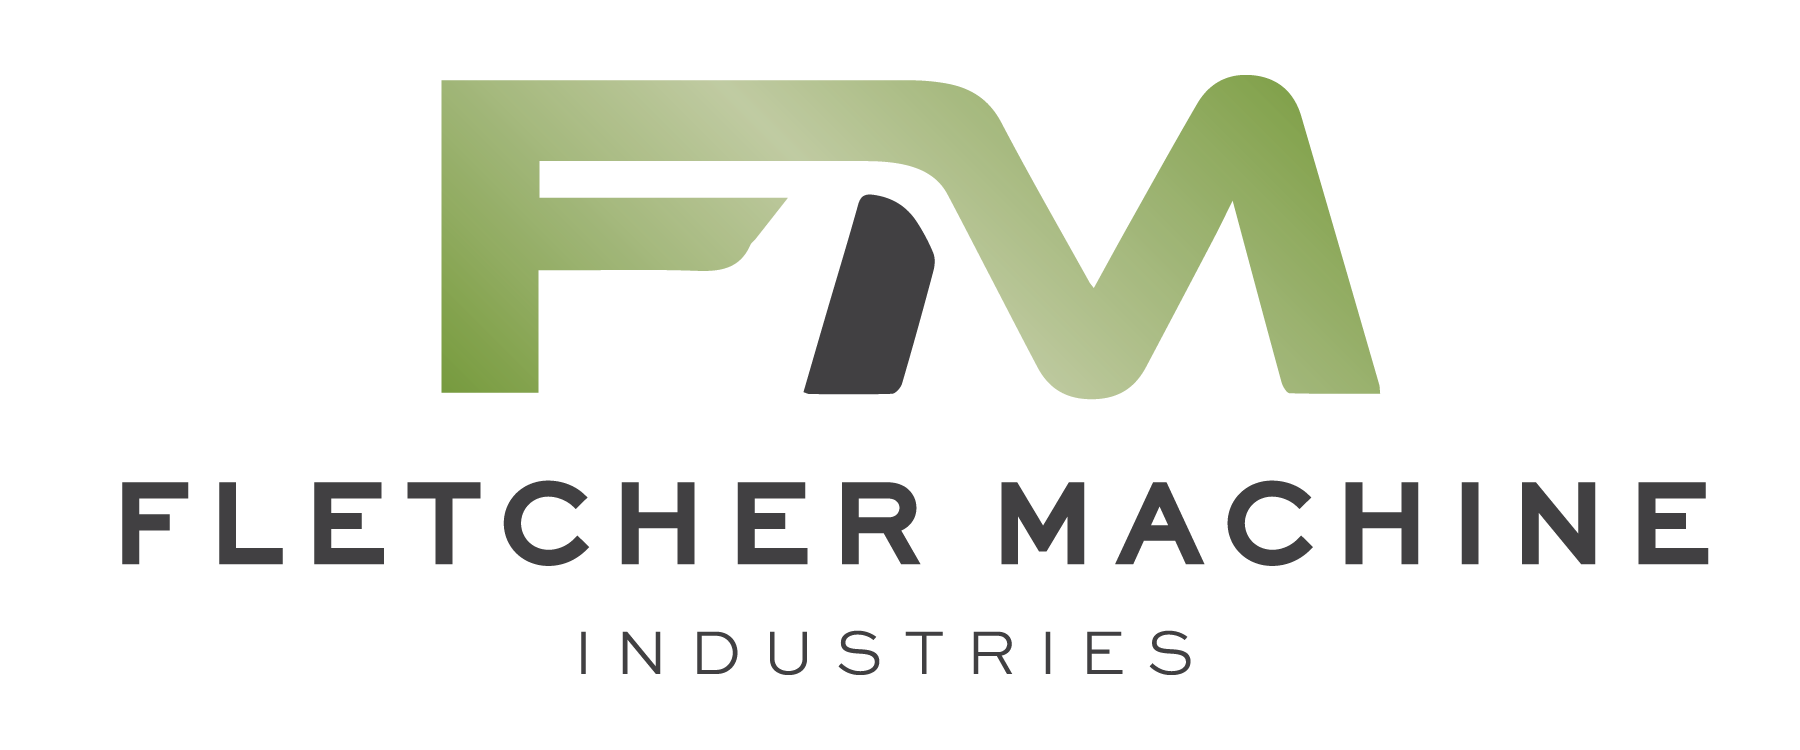 RP Fletcher Machine Co.